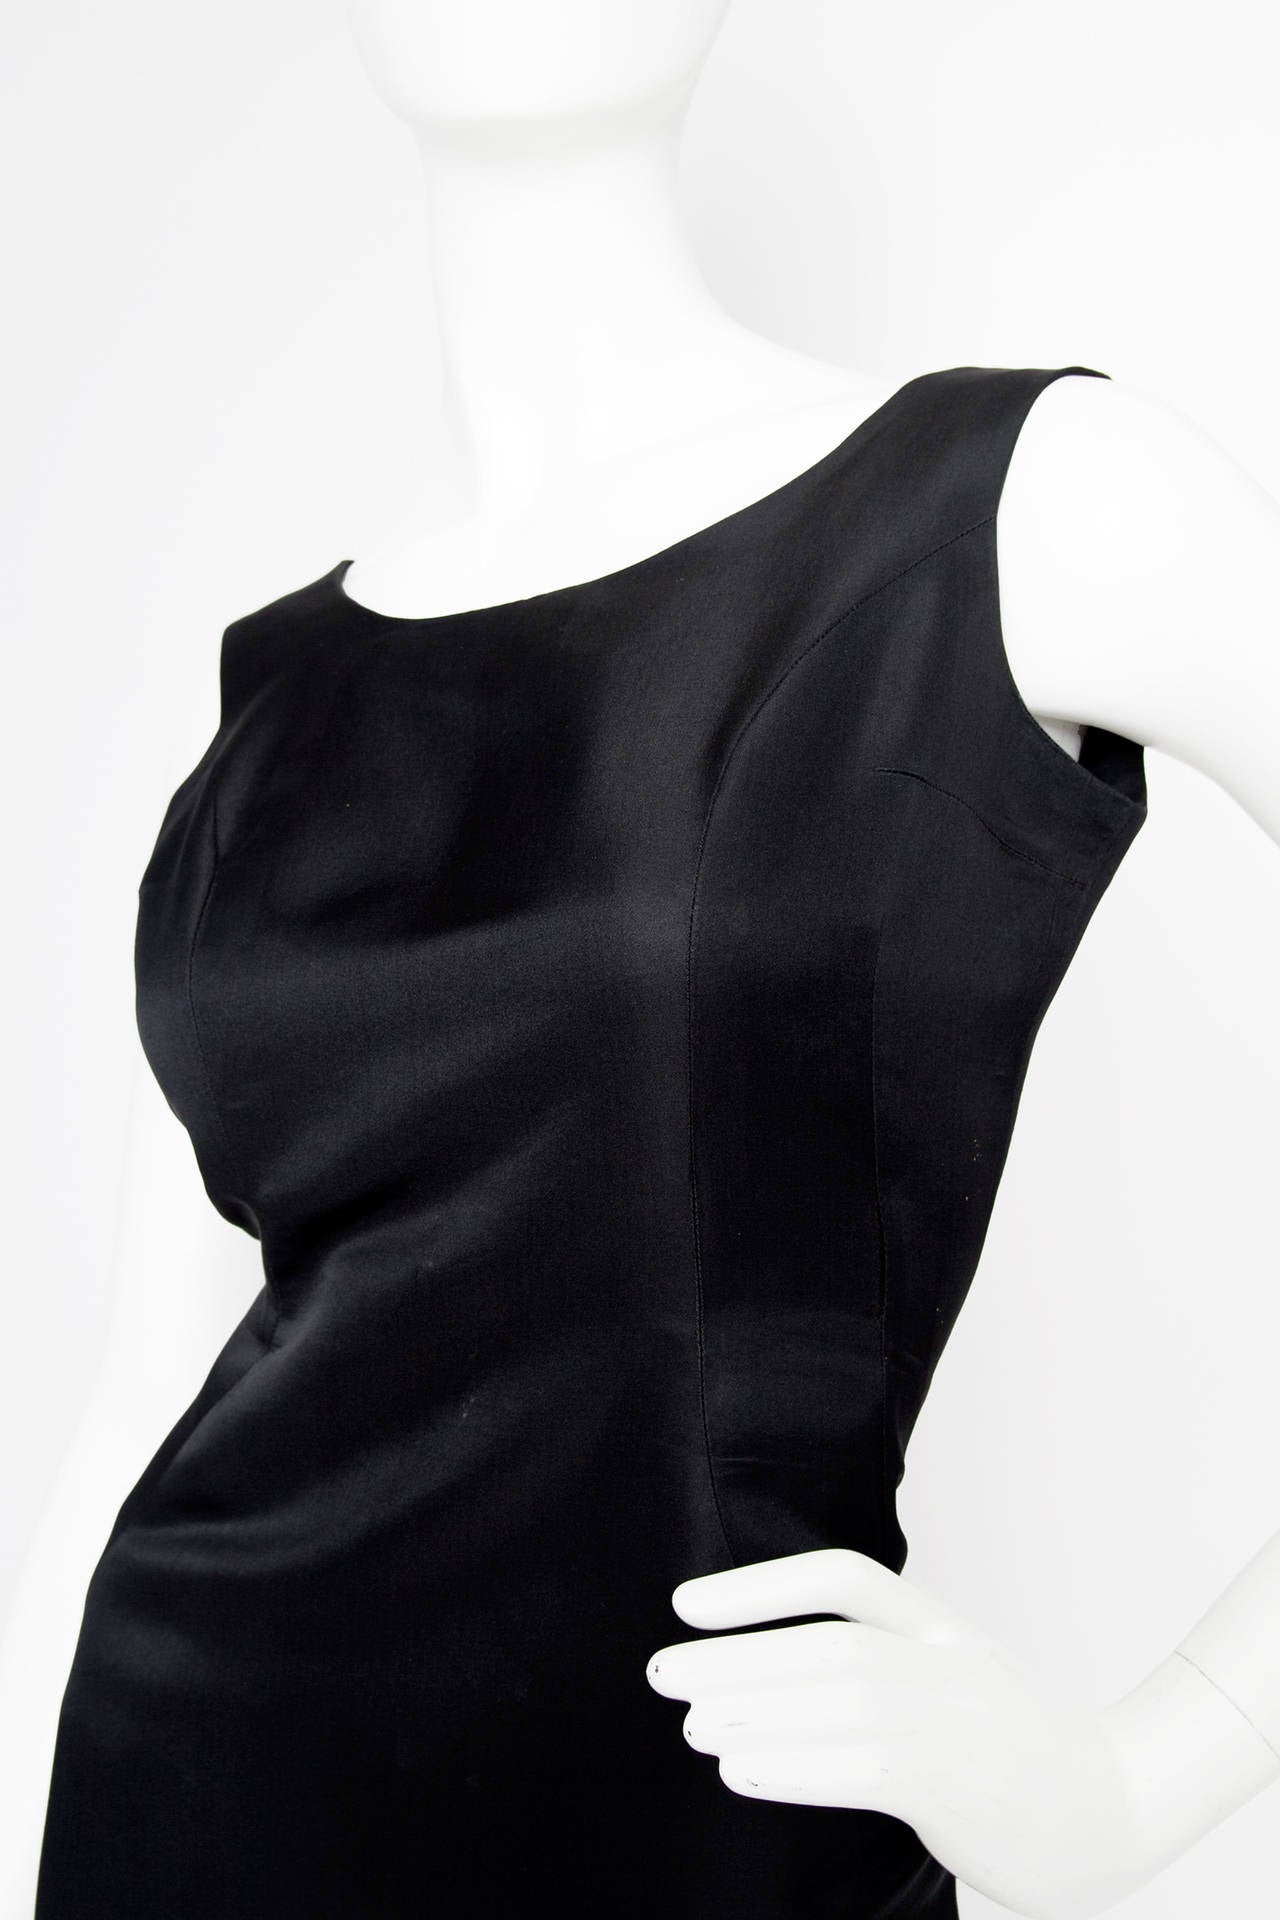 Rare 1960s Pierre Cardin Haute Couture Little Black Dress For Sale at ...